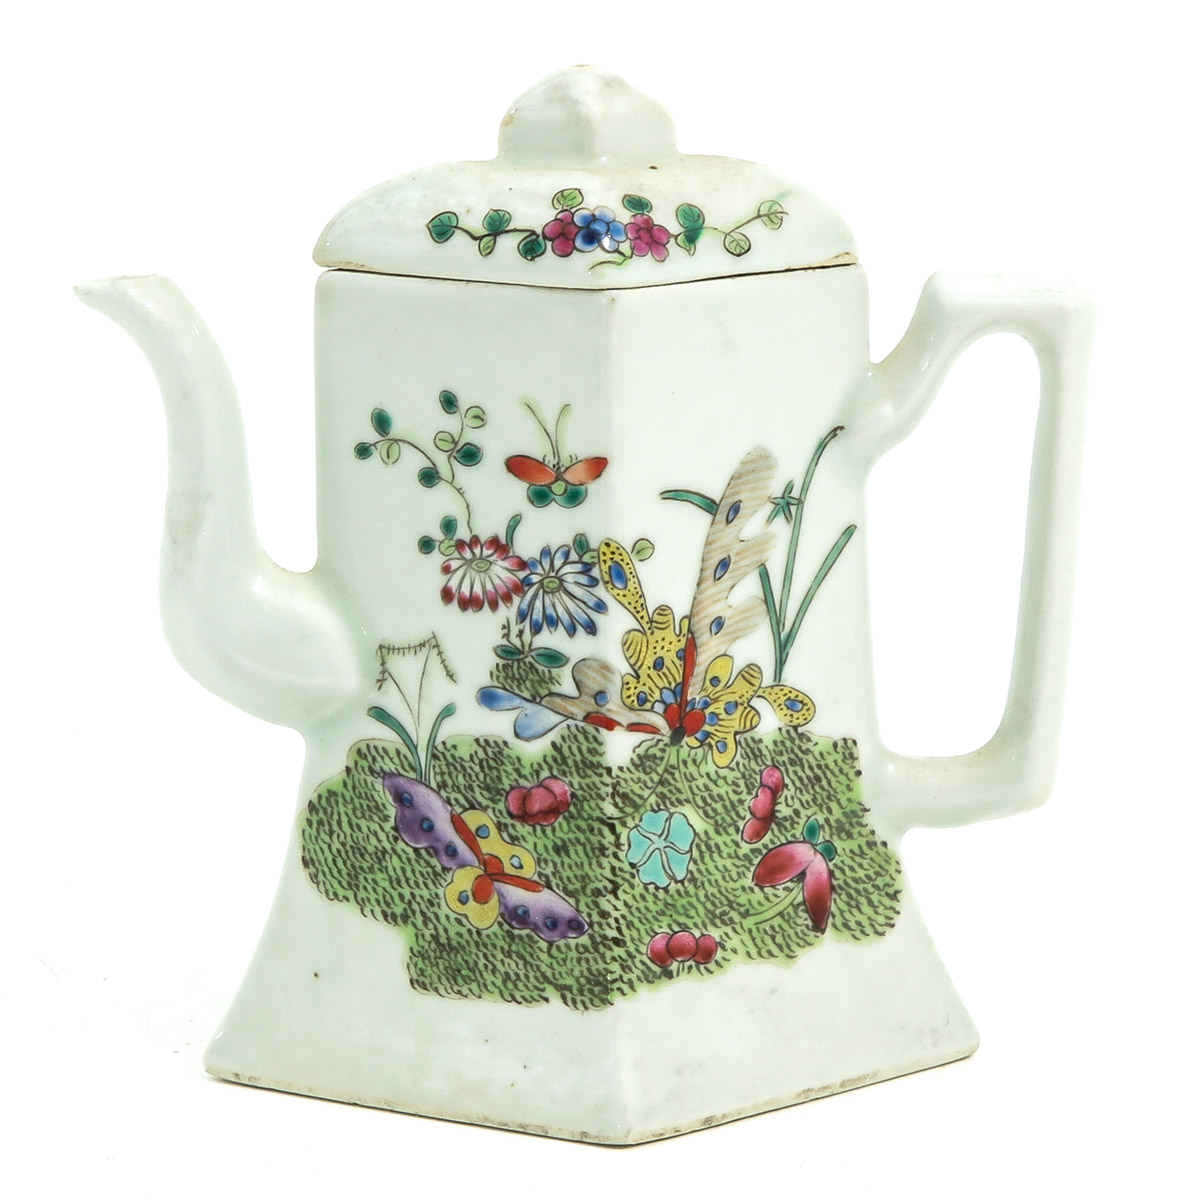 A Polychrome Decor Teapot